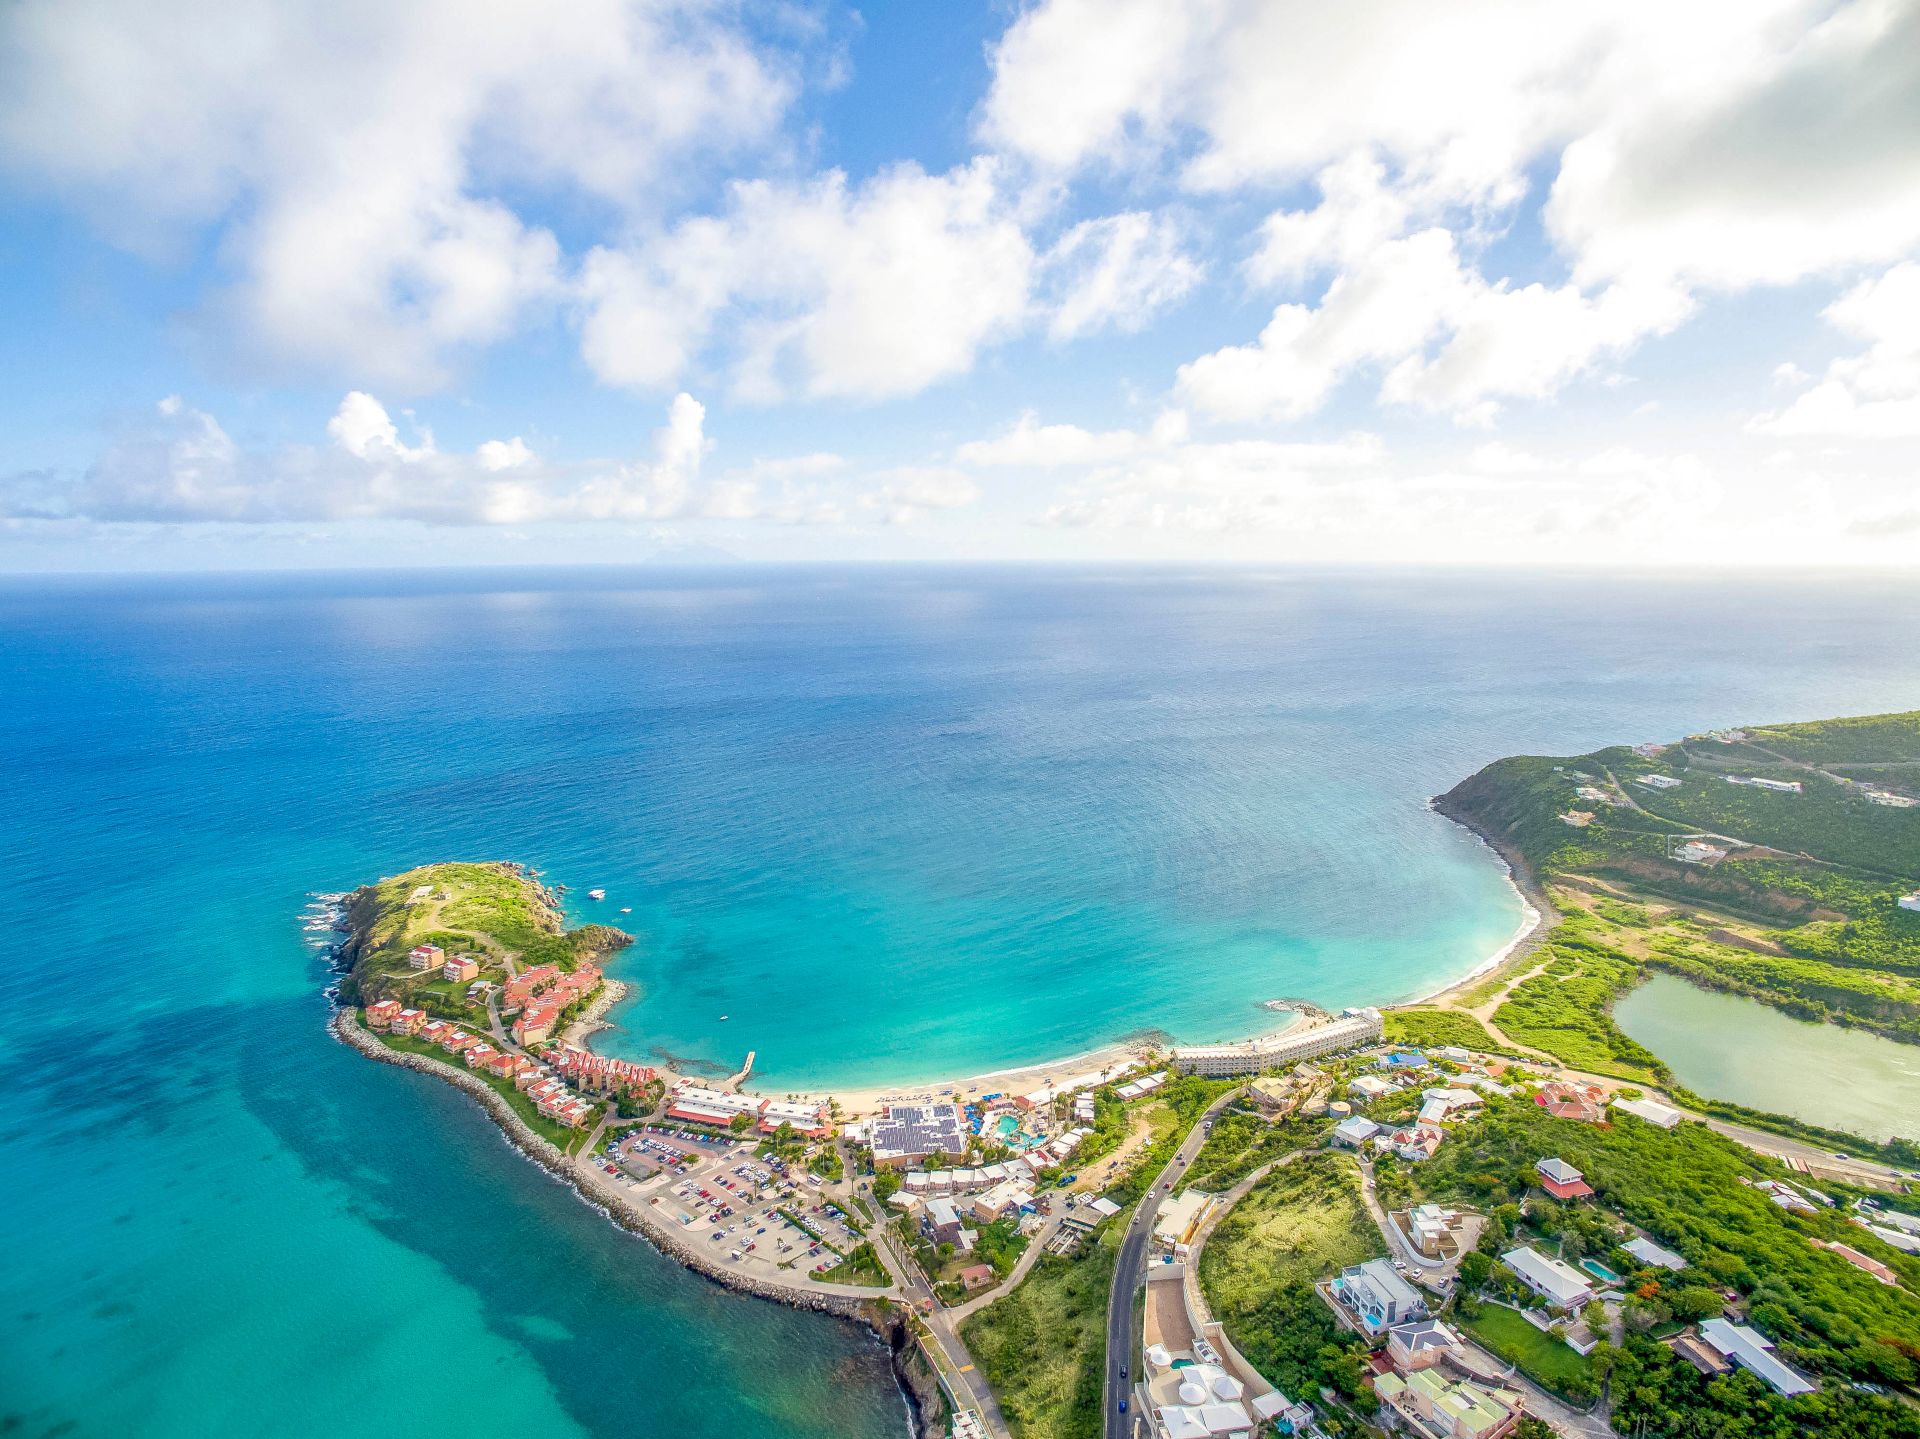 Bella veduta aerea dell'isola di Sint Maarten.